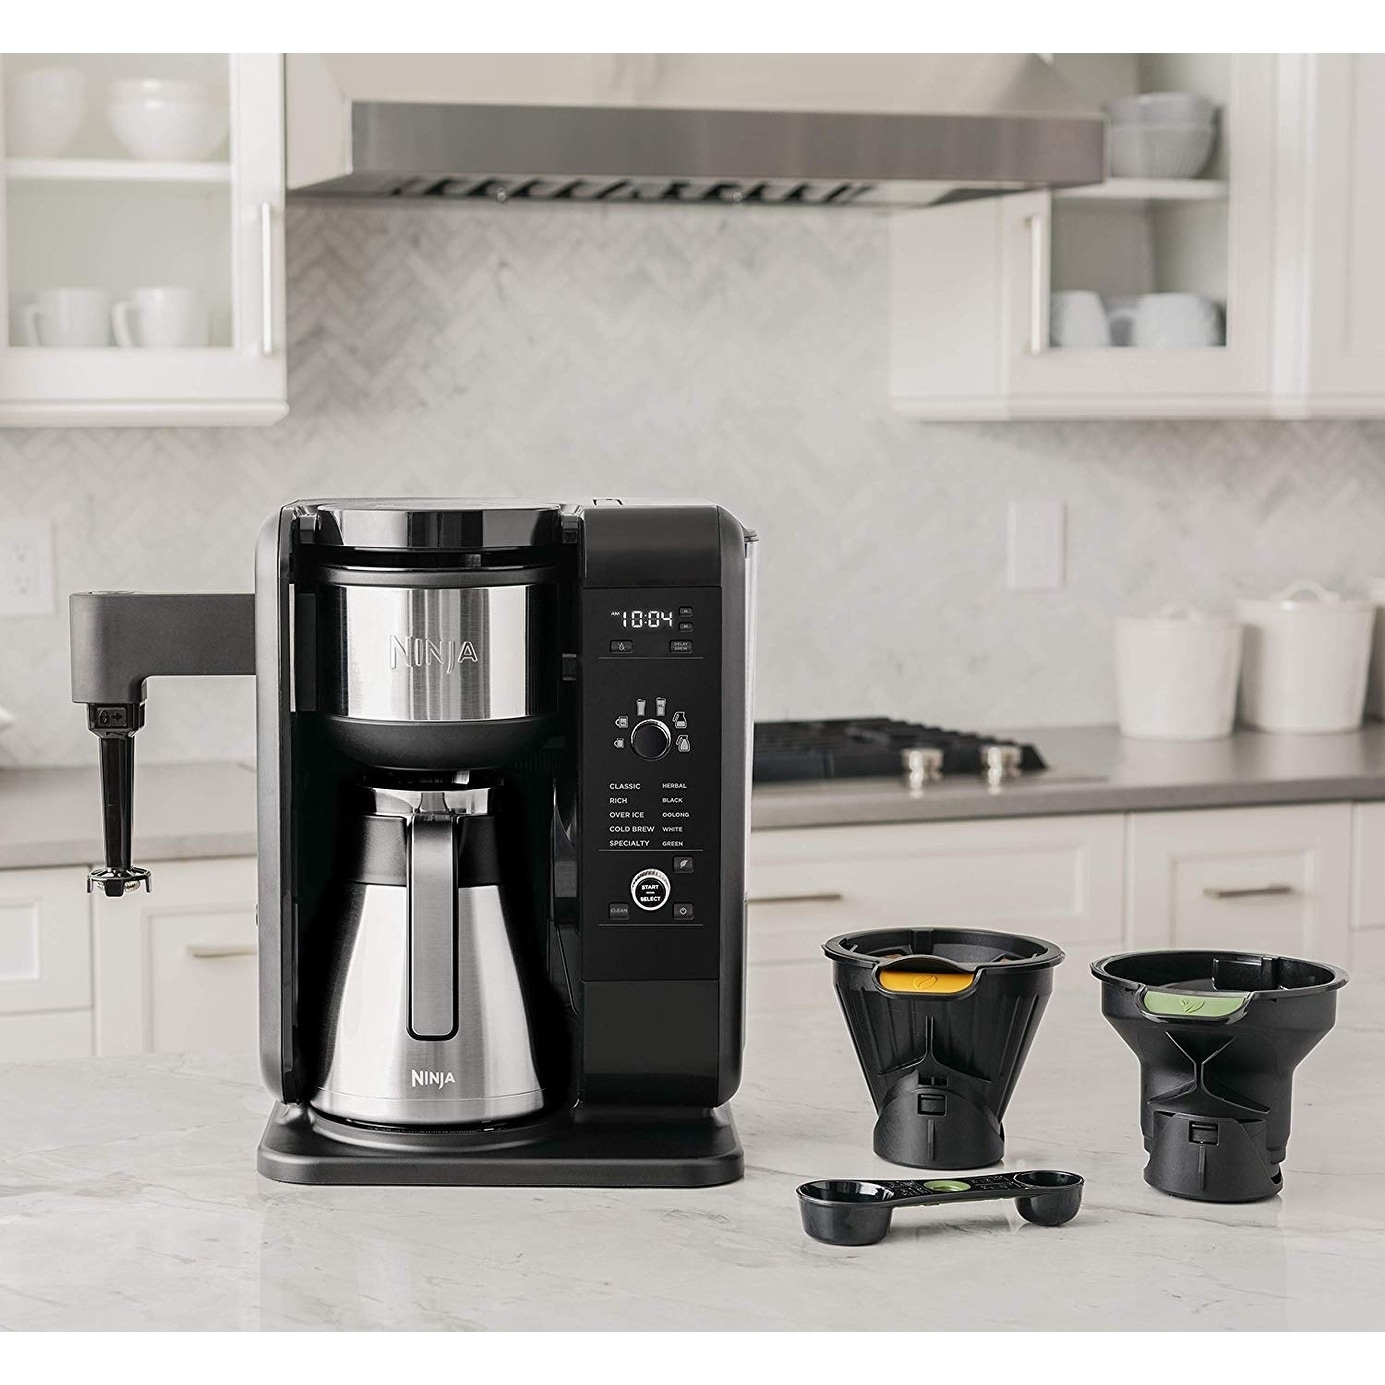 Refurbished Ninja Appliances: 10-Cup Hot & Iced Coffee Maker w